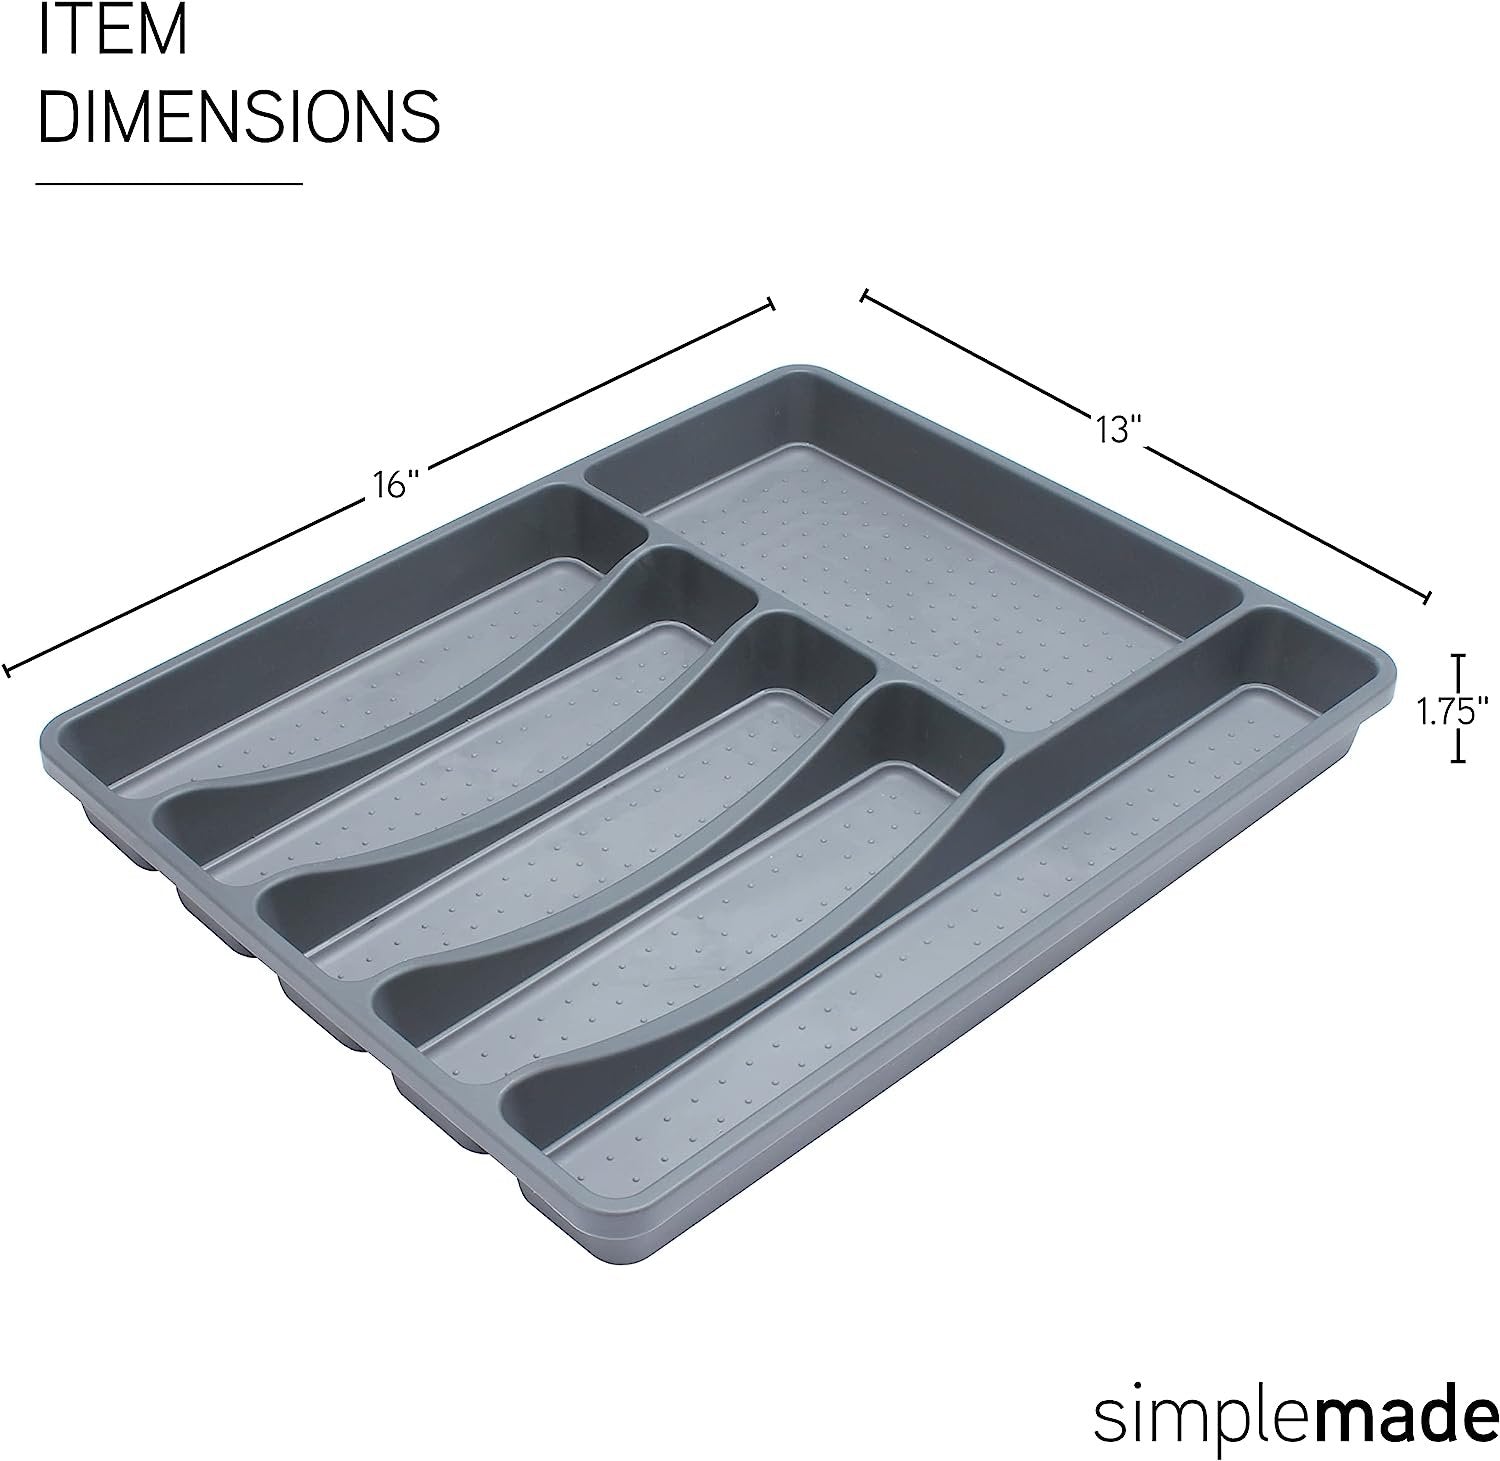 SIMPLEMADE Kitchen Drawer Silverware Organizer Tray - 6-Slot Small Flatware Holder and Utensil Holder - Desk Drawer Organizer - Storage for Kitchen, Office, Bathroom